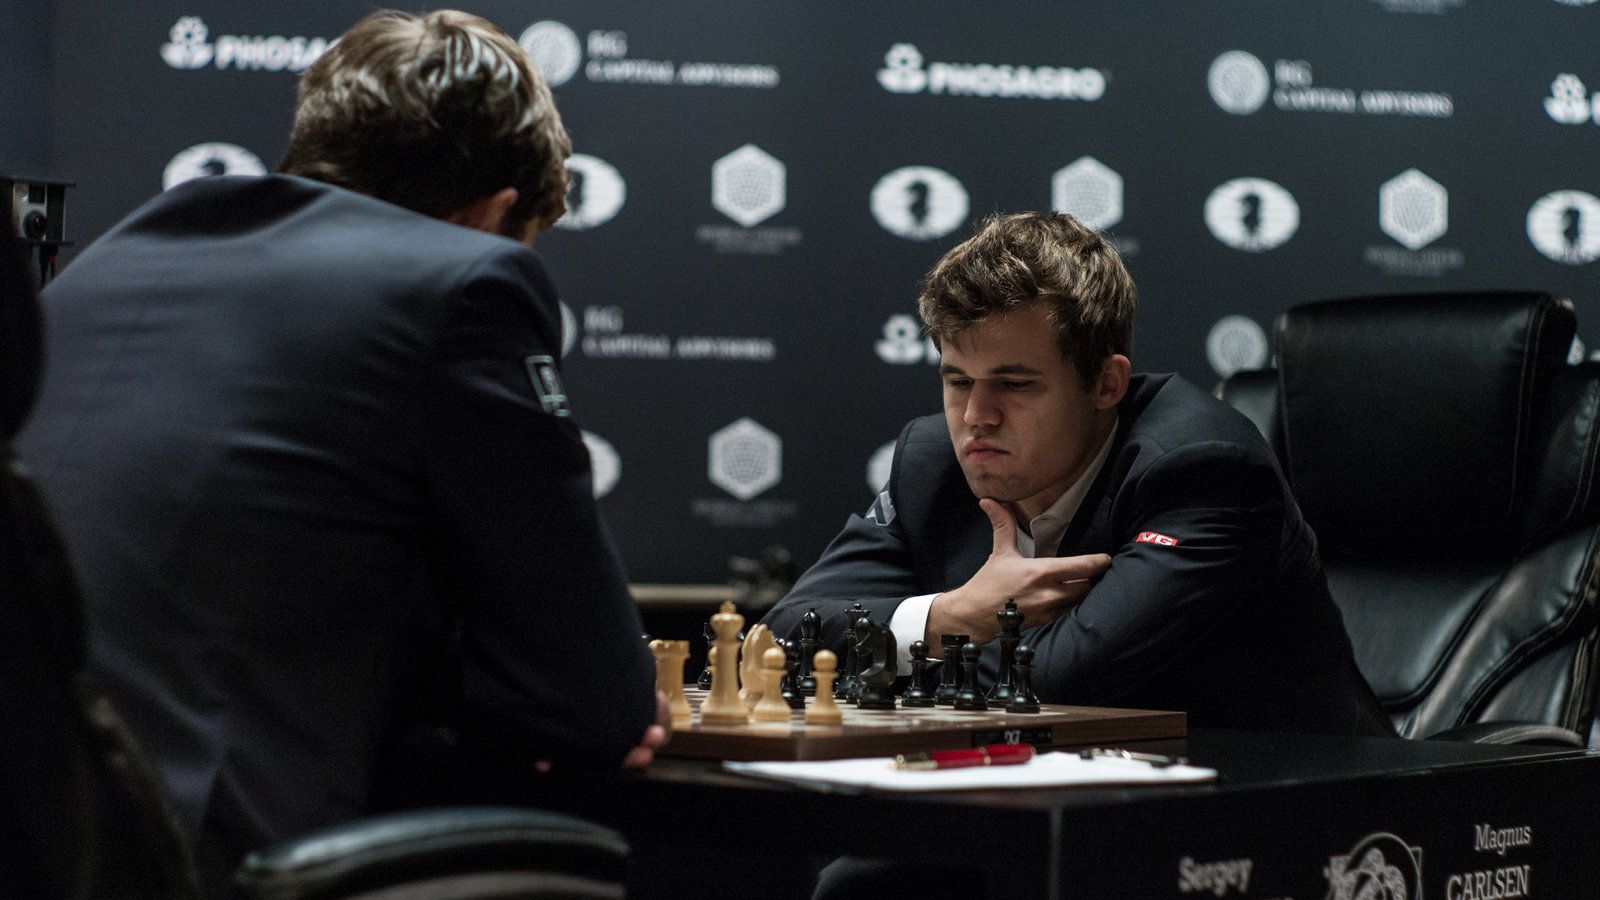 Magnus Carlsen and Sergey Karjakin in Dead Heat in Chess Championship